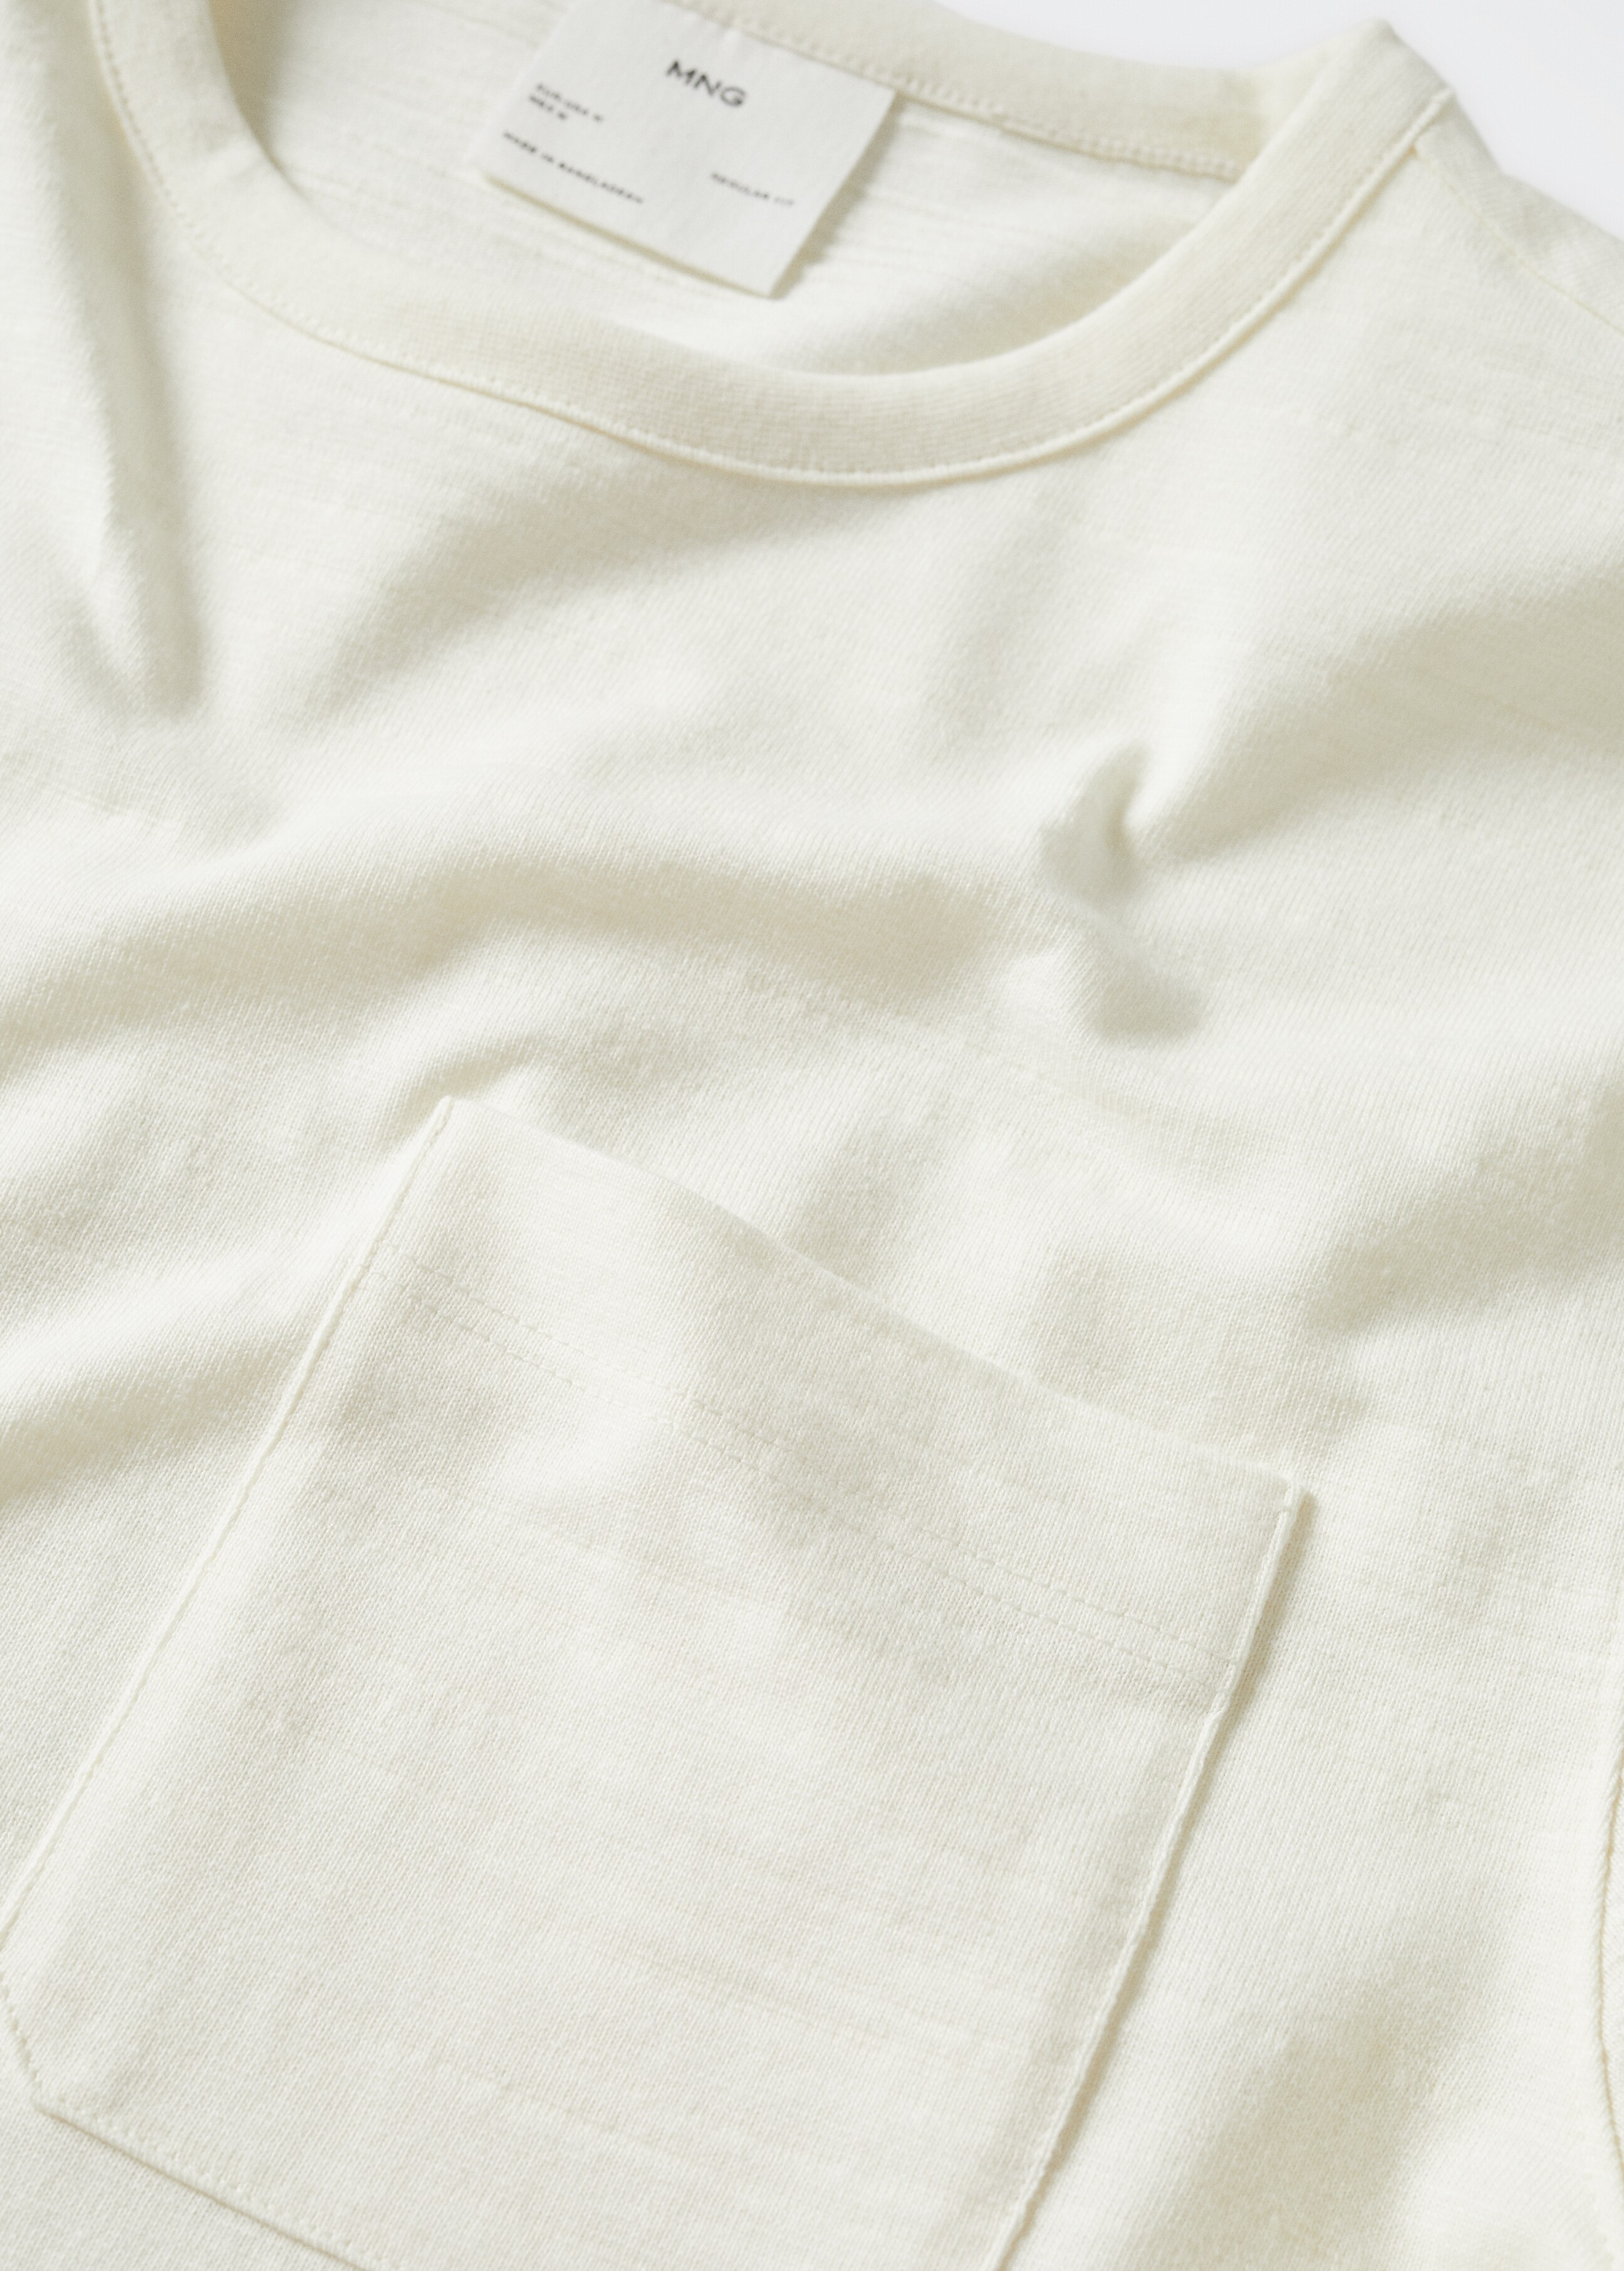 Pocket cotton sweatshirt - Details of the article 8